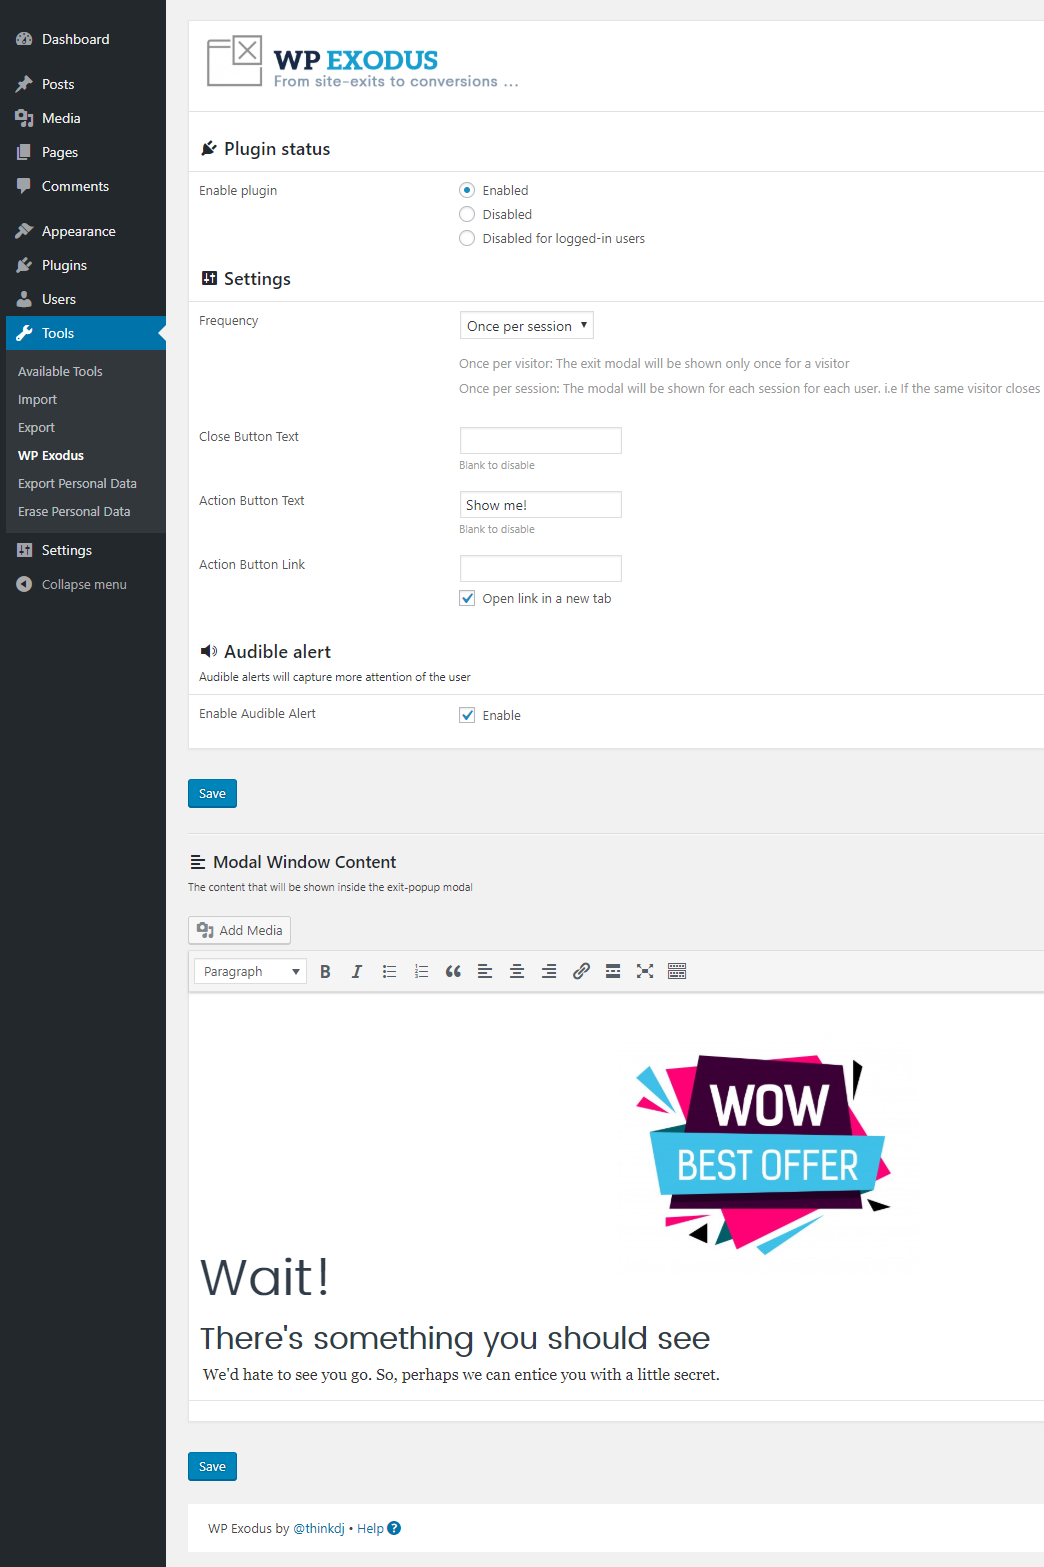 02 plugin options - WP Exodus: ข้อความทางการตลาดปรากฏขึ้นเมื่อผู้เยี่ยมชมพยายามออกจากเว็บไซต์ของคุณ สร้างเว็บไซต์, ปลั๊กอิน เว็บขายของ, ปลั๊กอิน ร้านค้า, ปลั๊กอิน wordpress, ปลั๊กอิน woocommerce, ทำเว็บไซต์, ซื้อปลั๊กอิน, ซื้อ plugin wordpress, wp plugins, wp plug-in, wp, wordpress plugin, wordpress marketing, wordpress, woocommerce plugin, woocommerce, visitor conversion, ux, prevent site exit, plugin ดีๆ, modal, marketing plugin, exit intent, codecanyon, audible alert, ads